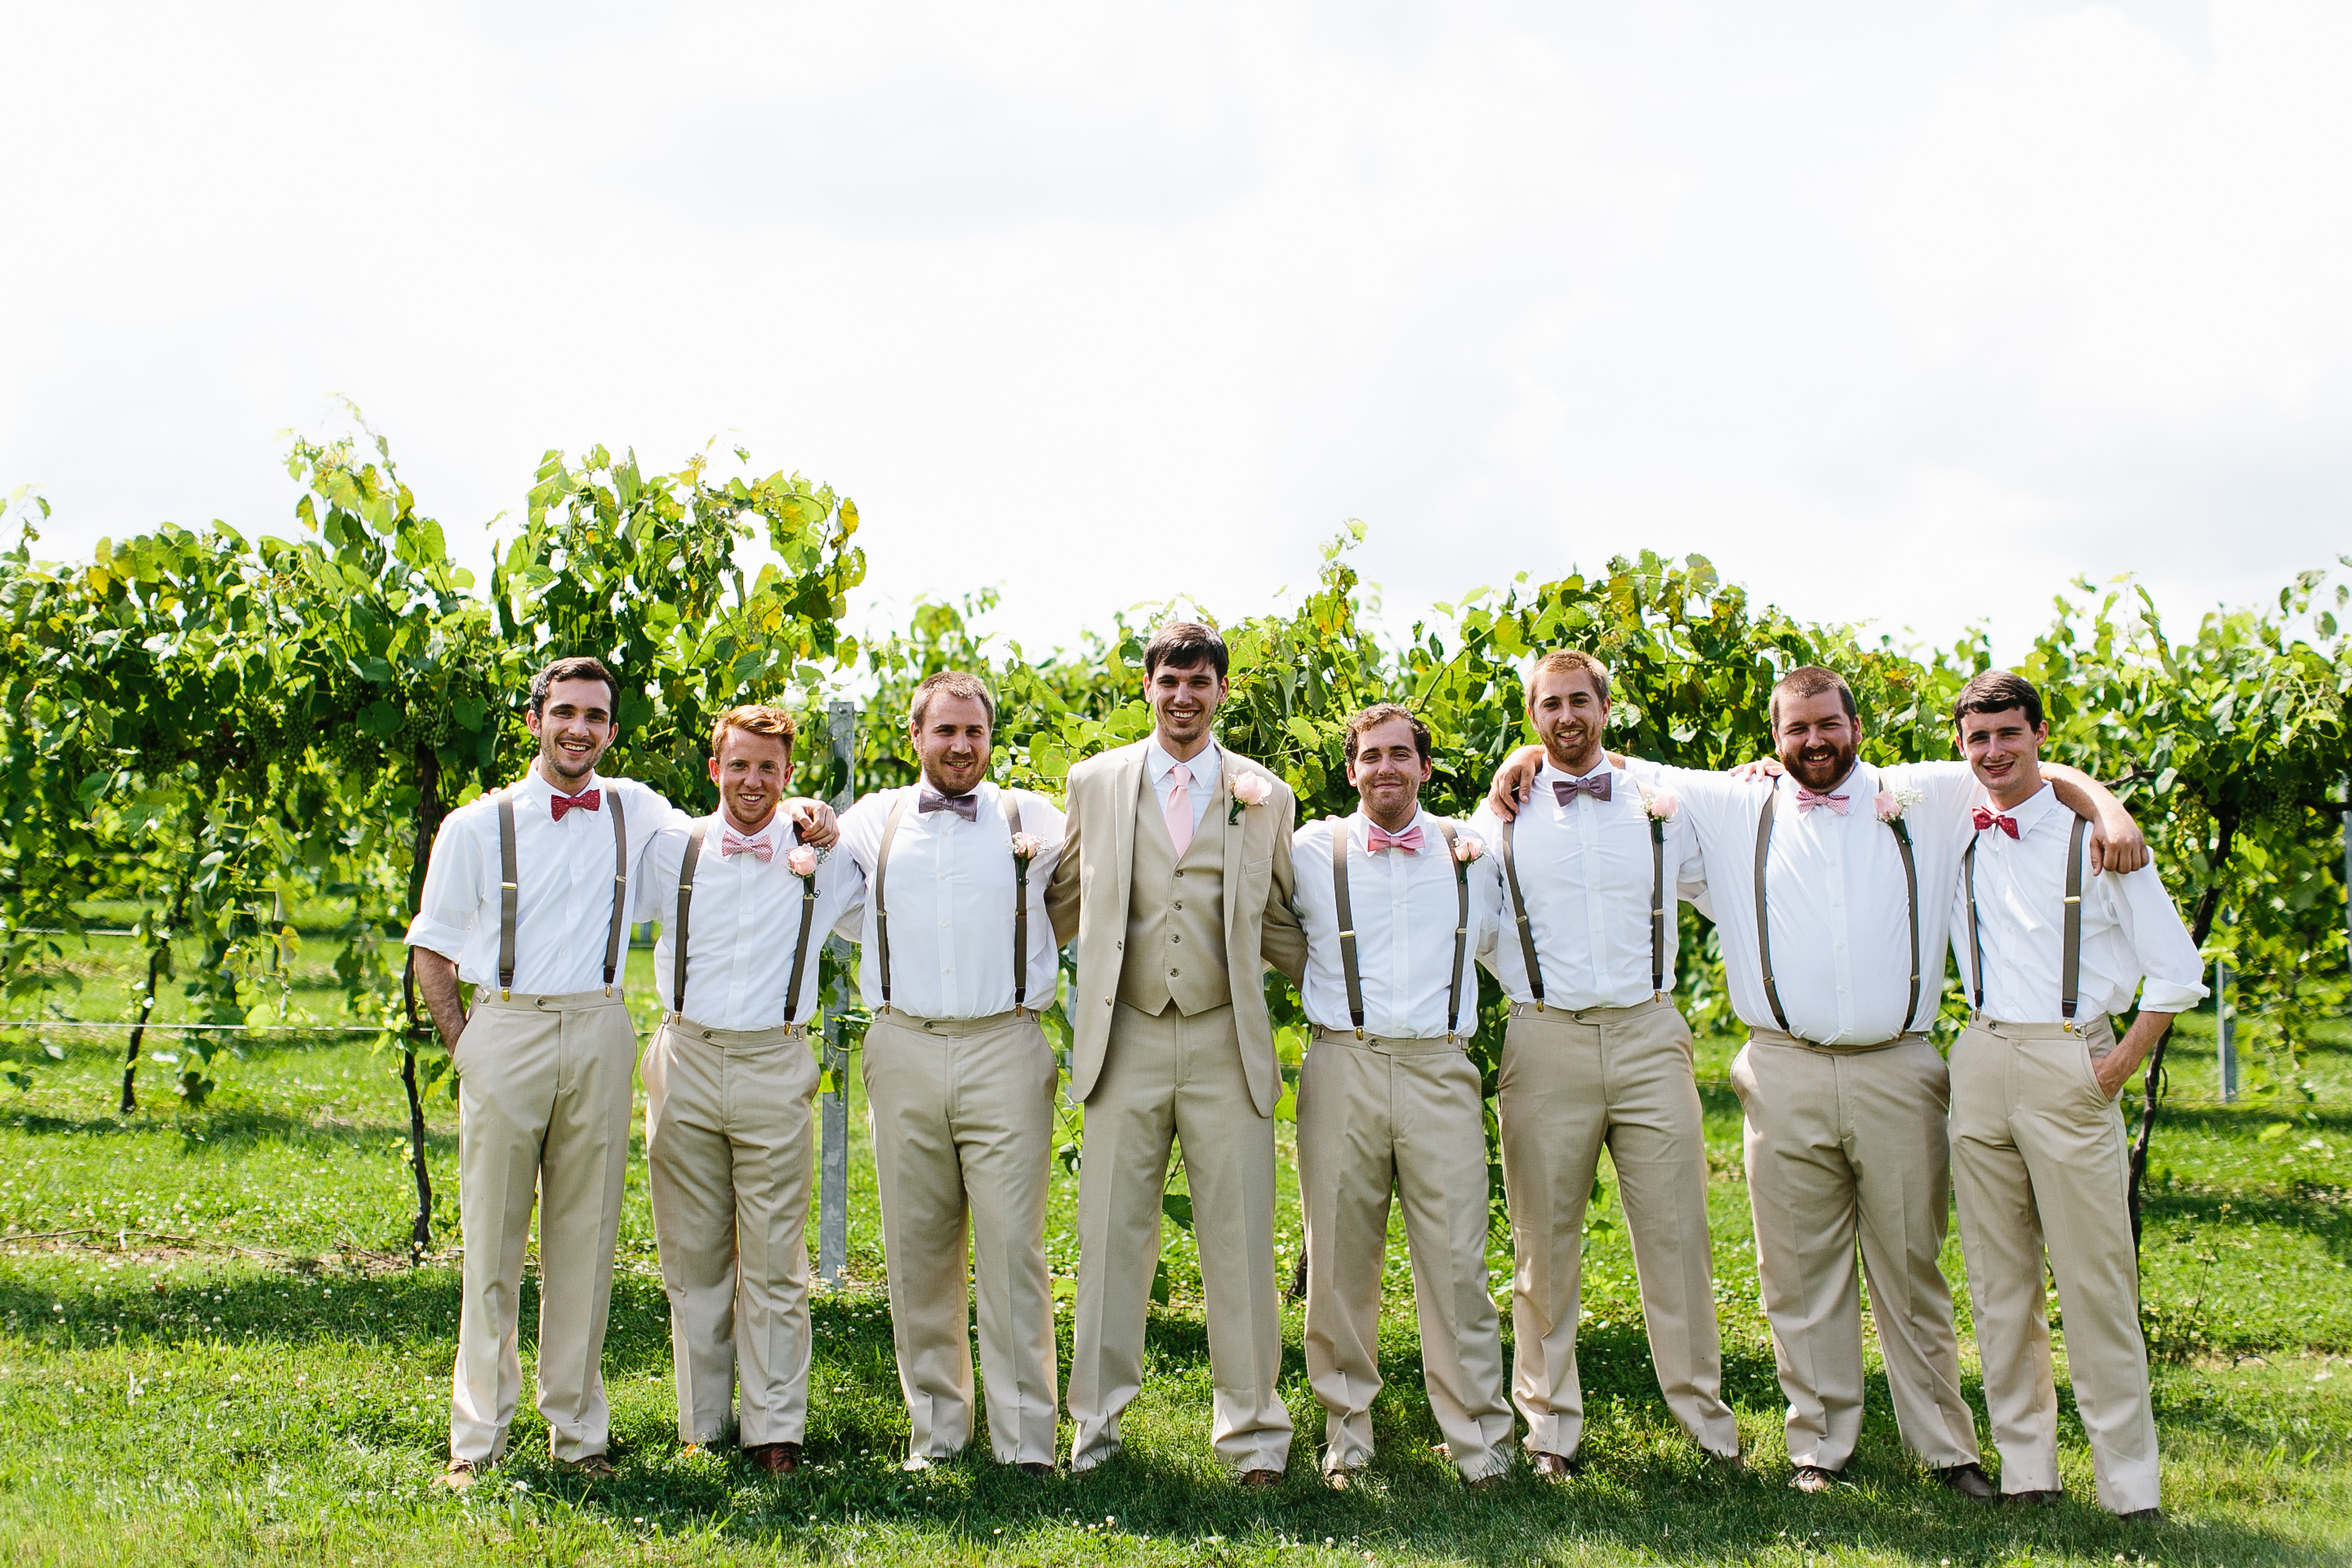 groomsmen with suspenders. causal groomsmen attire. groomsmen